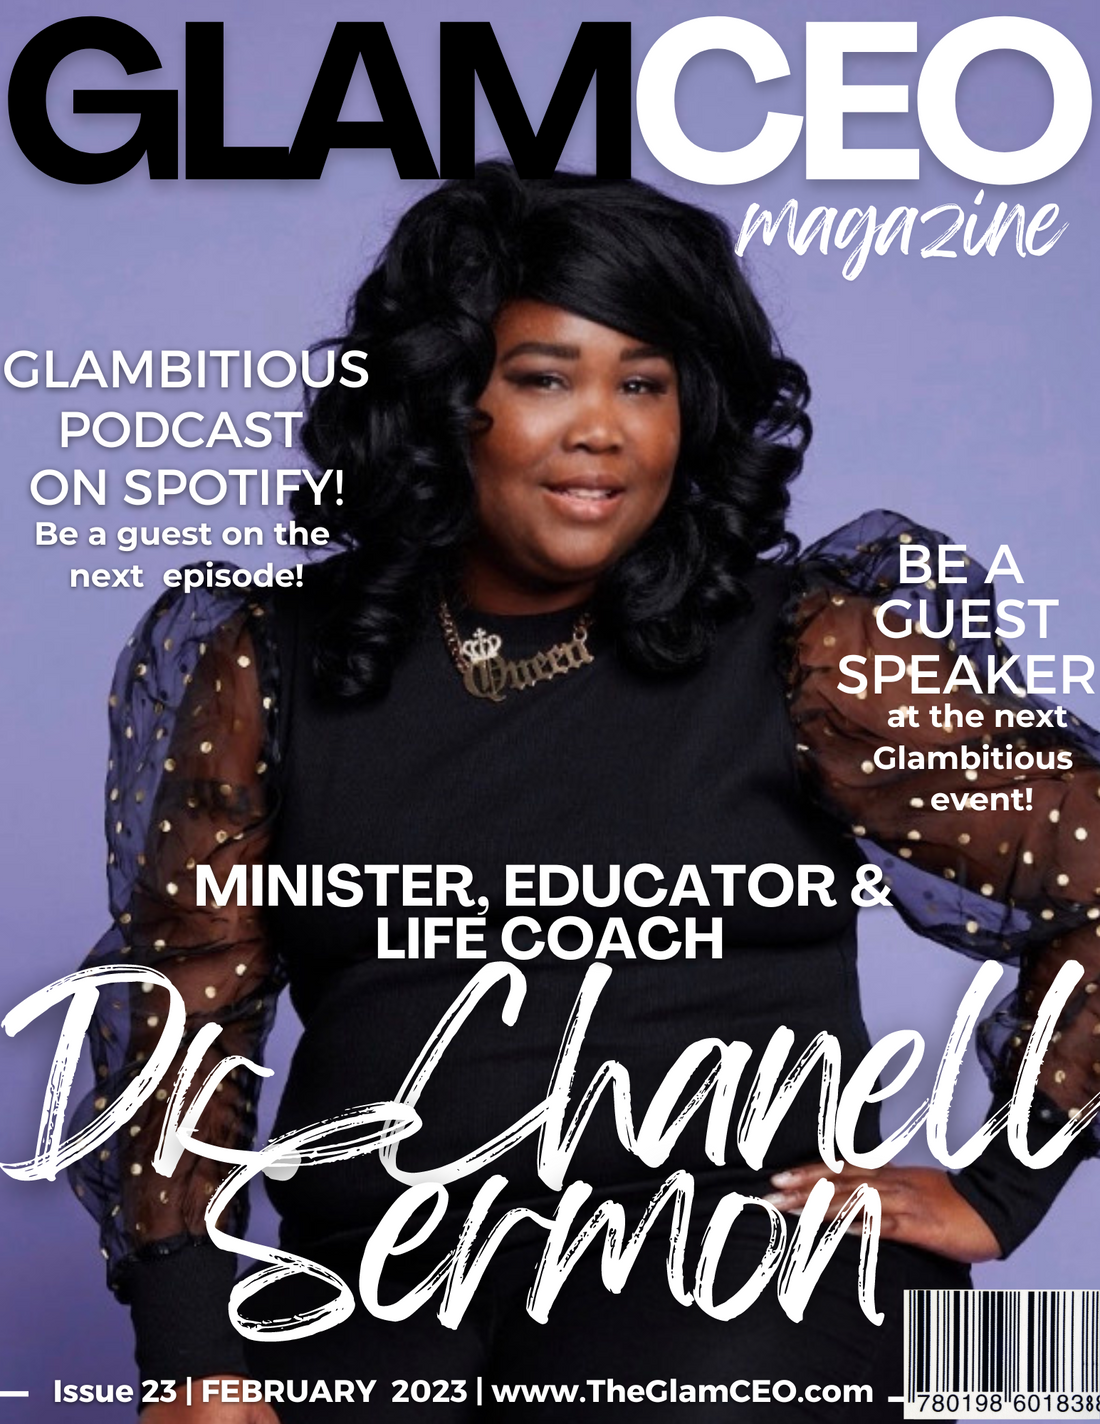 Meet Glam CEO: Dr. Chanell Dingle-Sermon